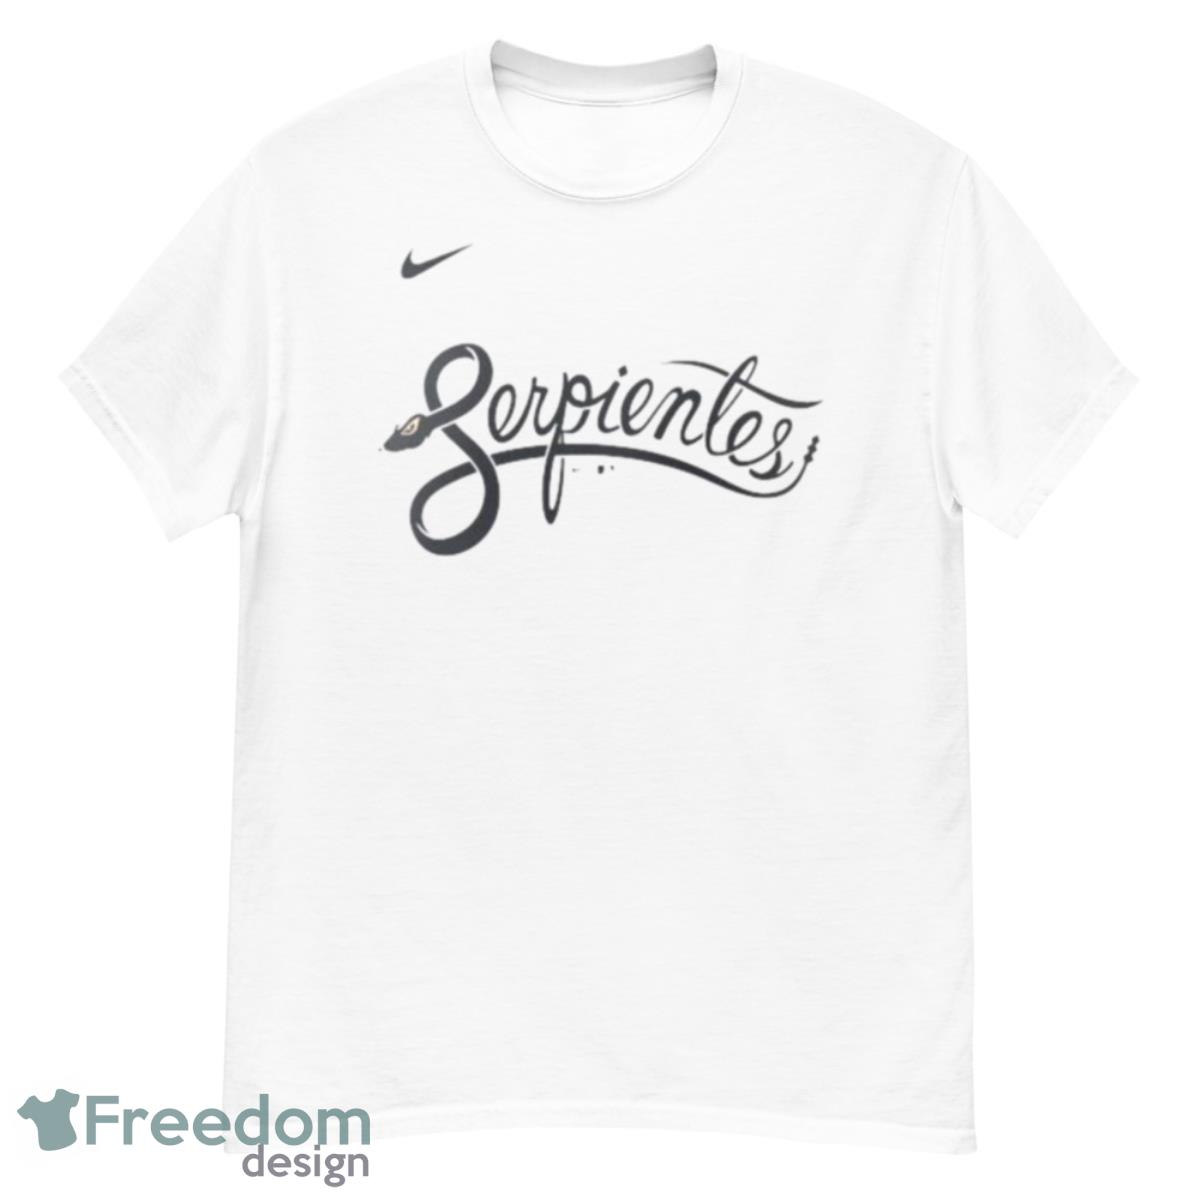 Arizona Diamondbacks Nike Serpientes Shirt - Freedomdesign